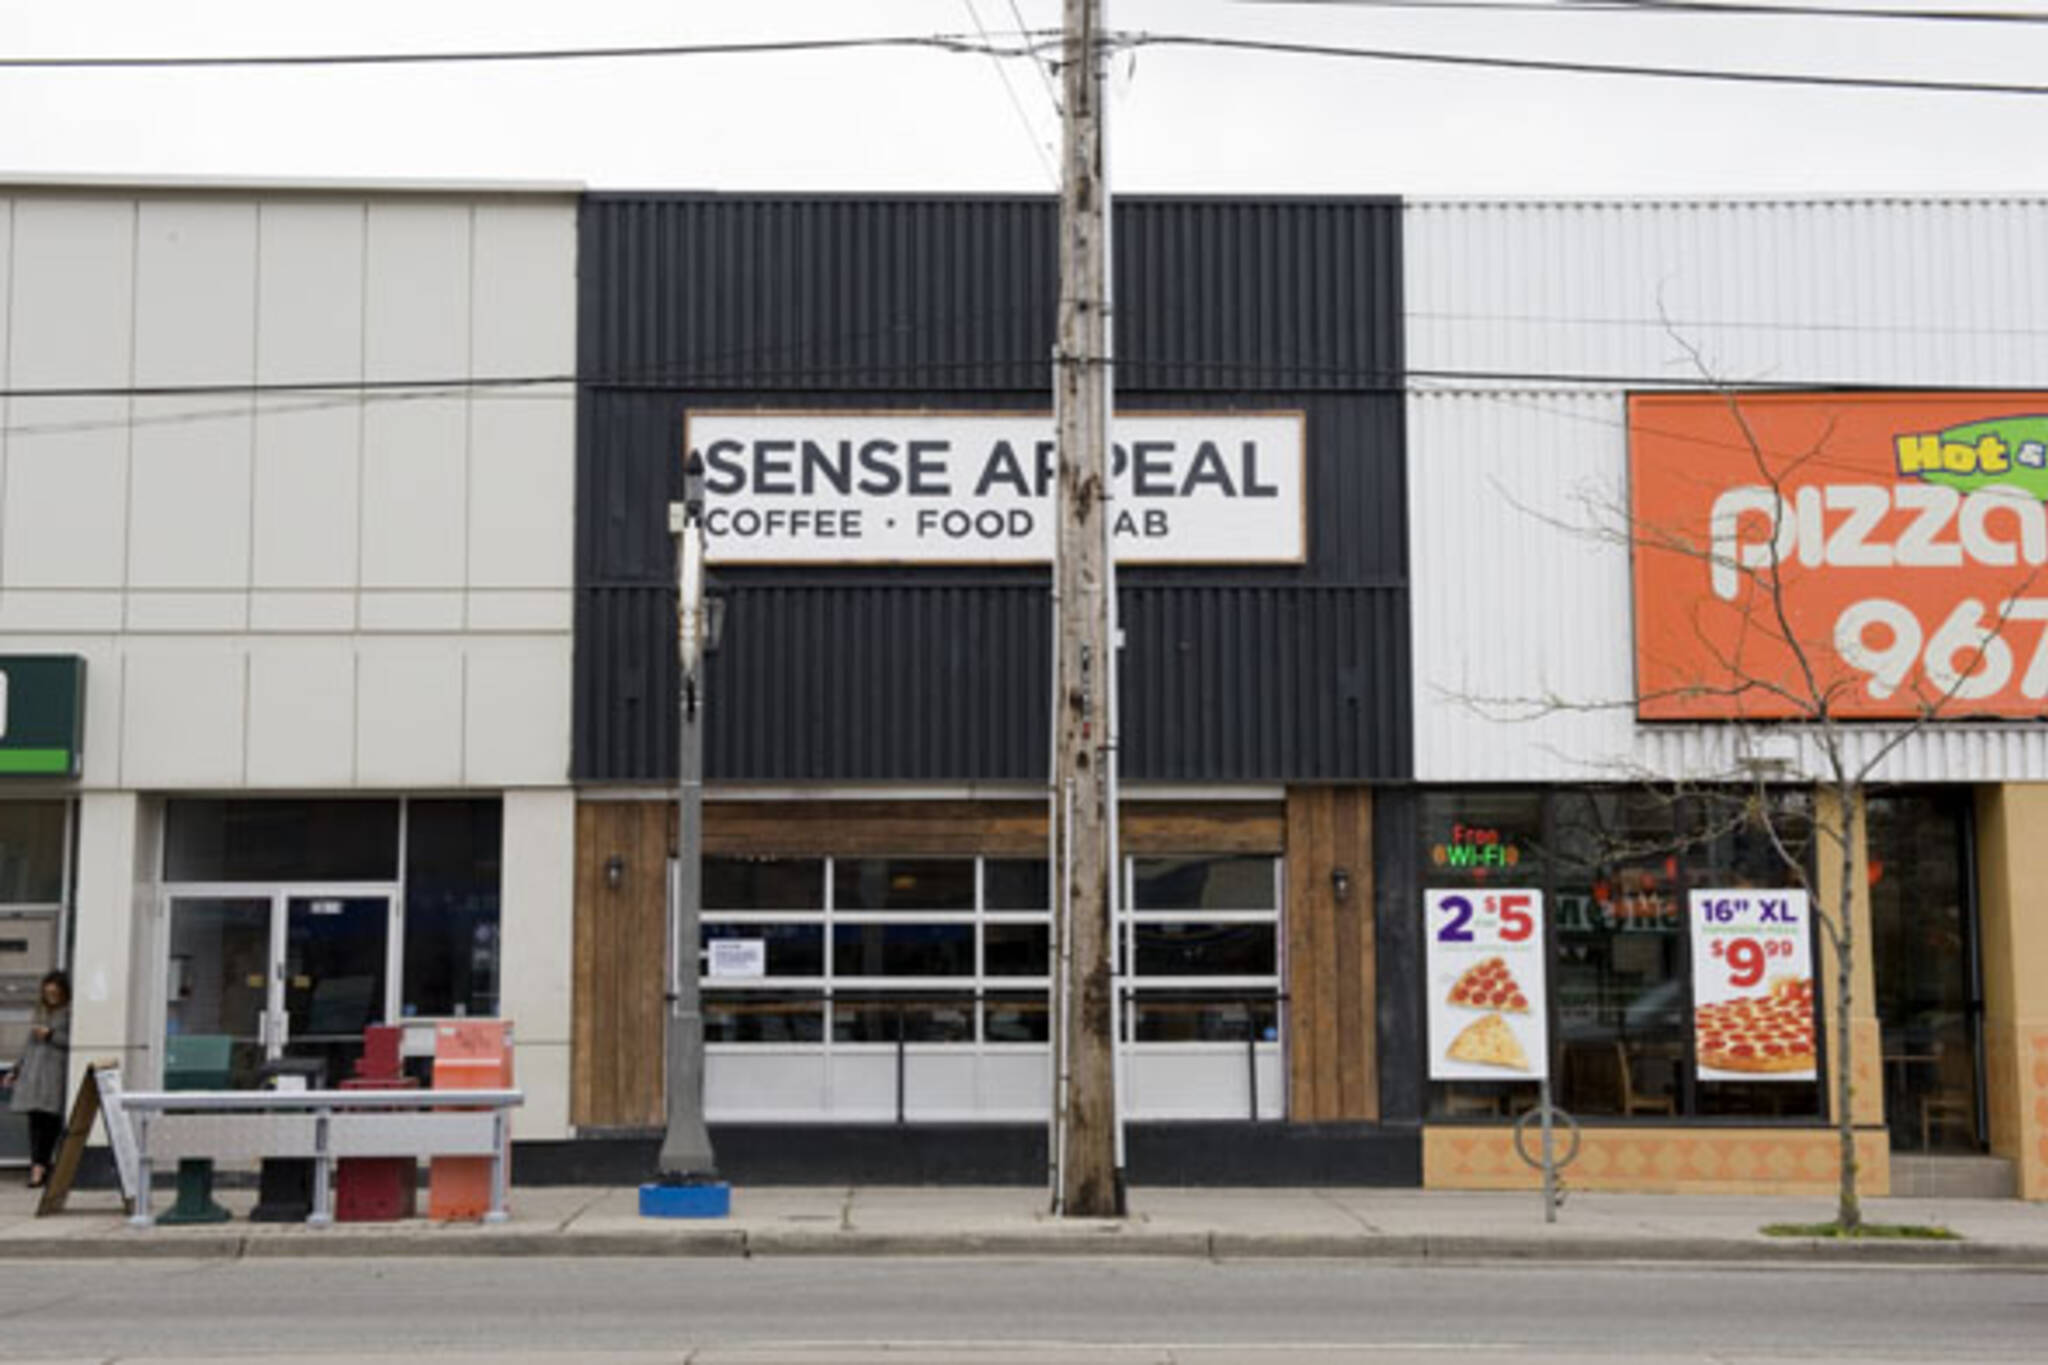 Sense Appeal Toronto closed